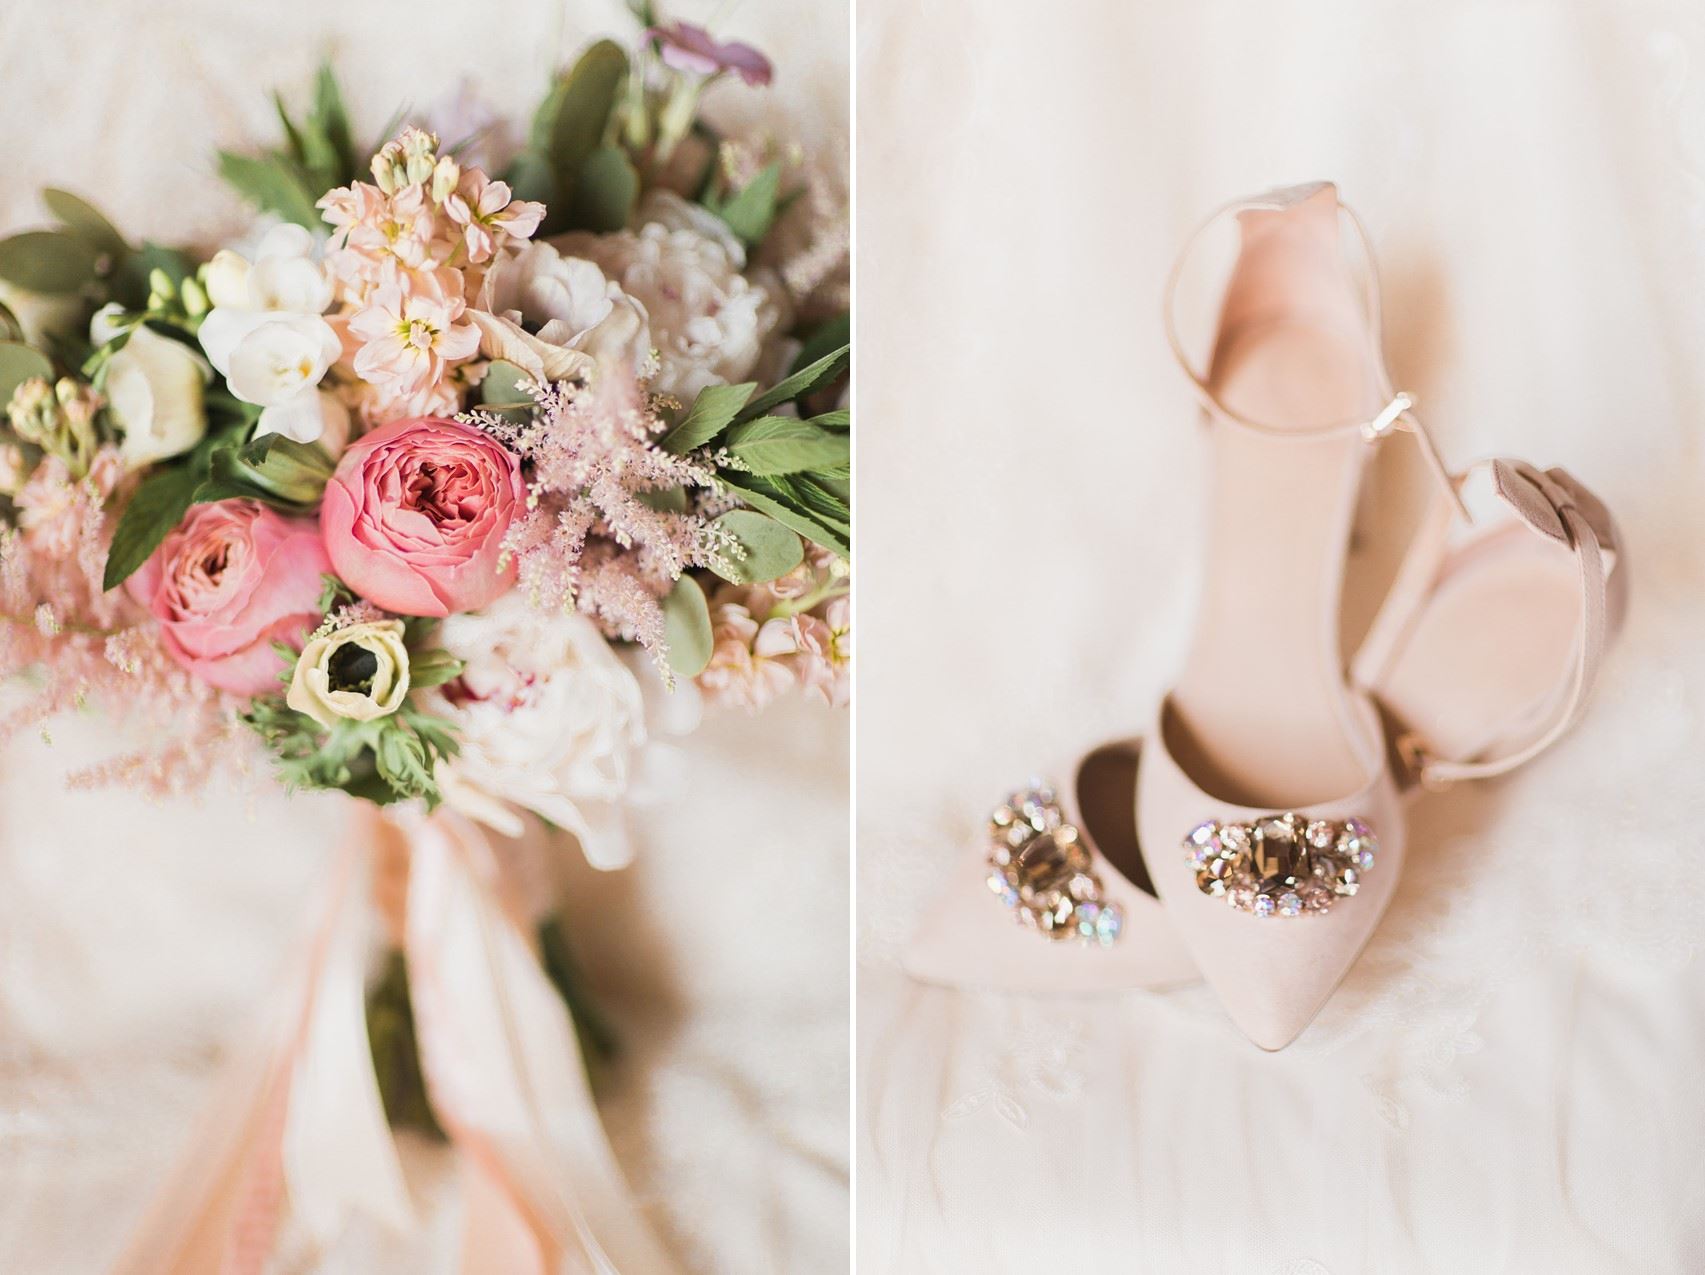 Pink Bridal Shoes - A Romantic Modern-Vintage Wedding with an Elegant Barn Reception